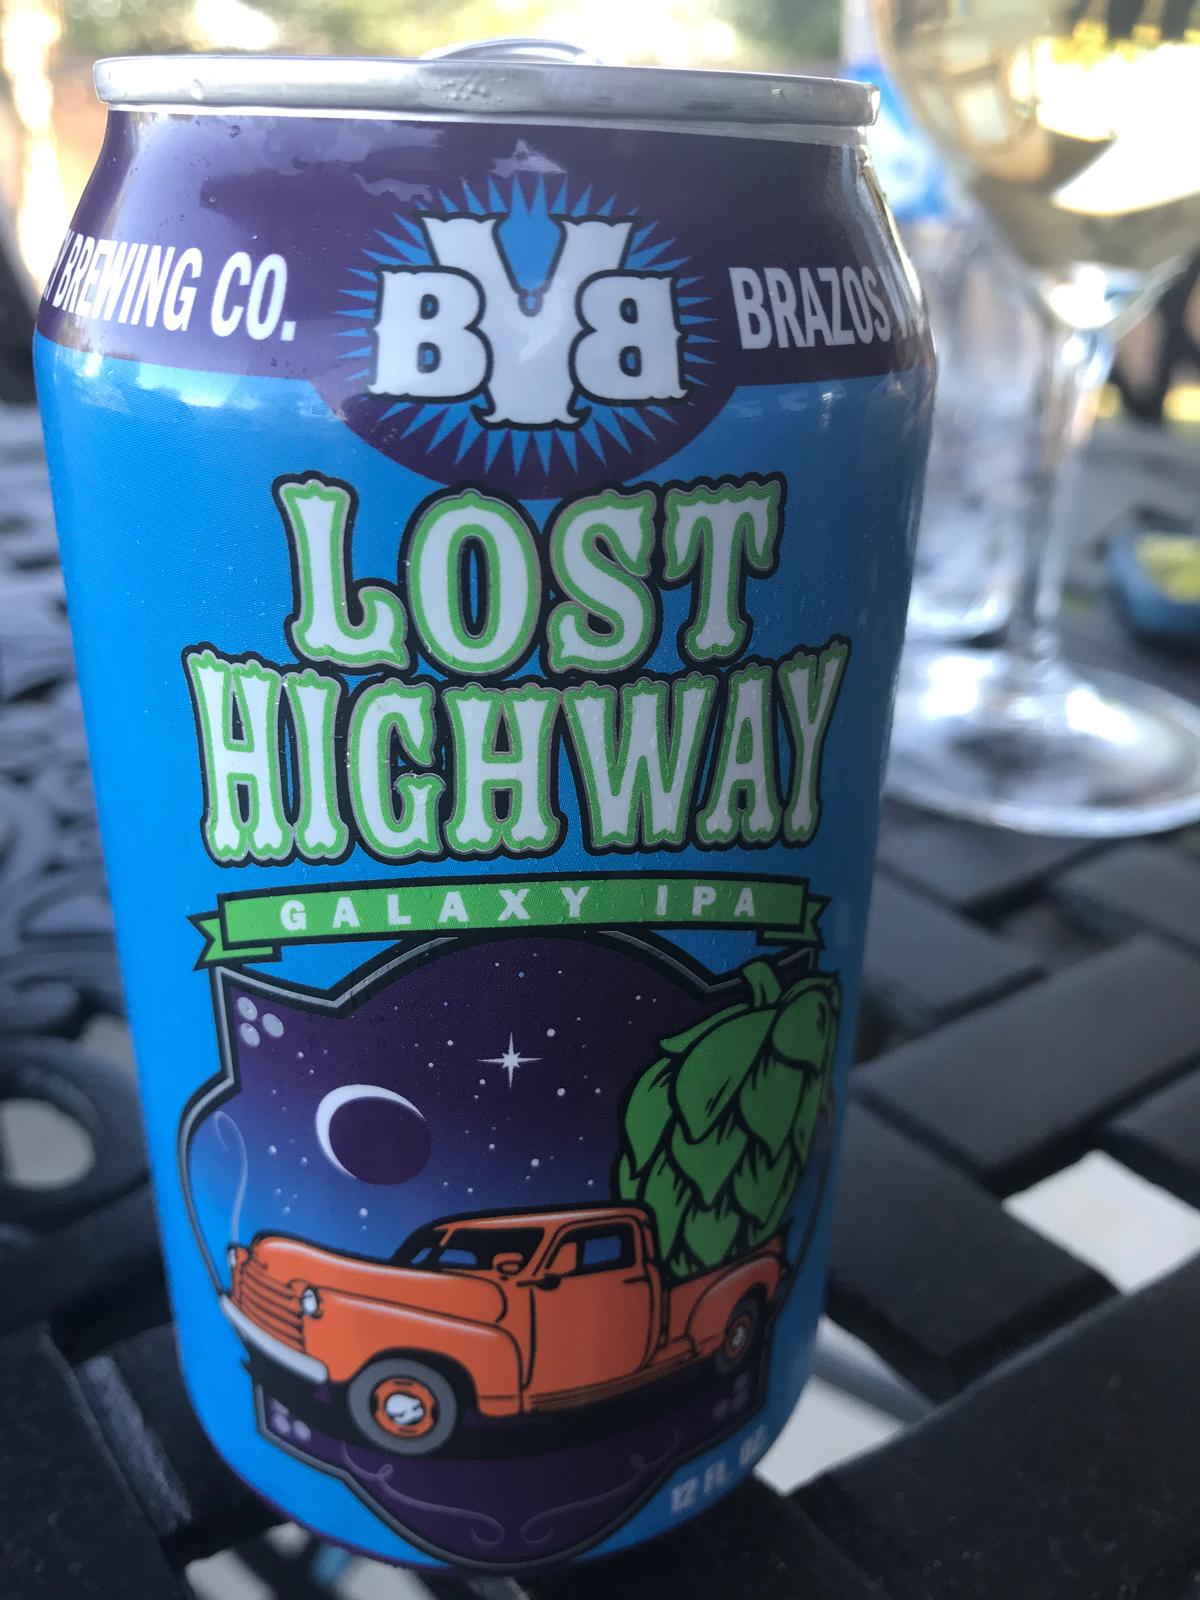 Lost Highway - Galaxy IPA